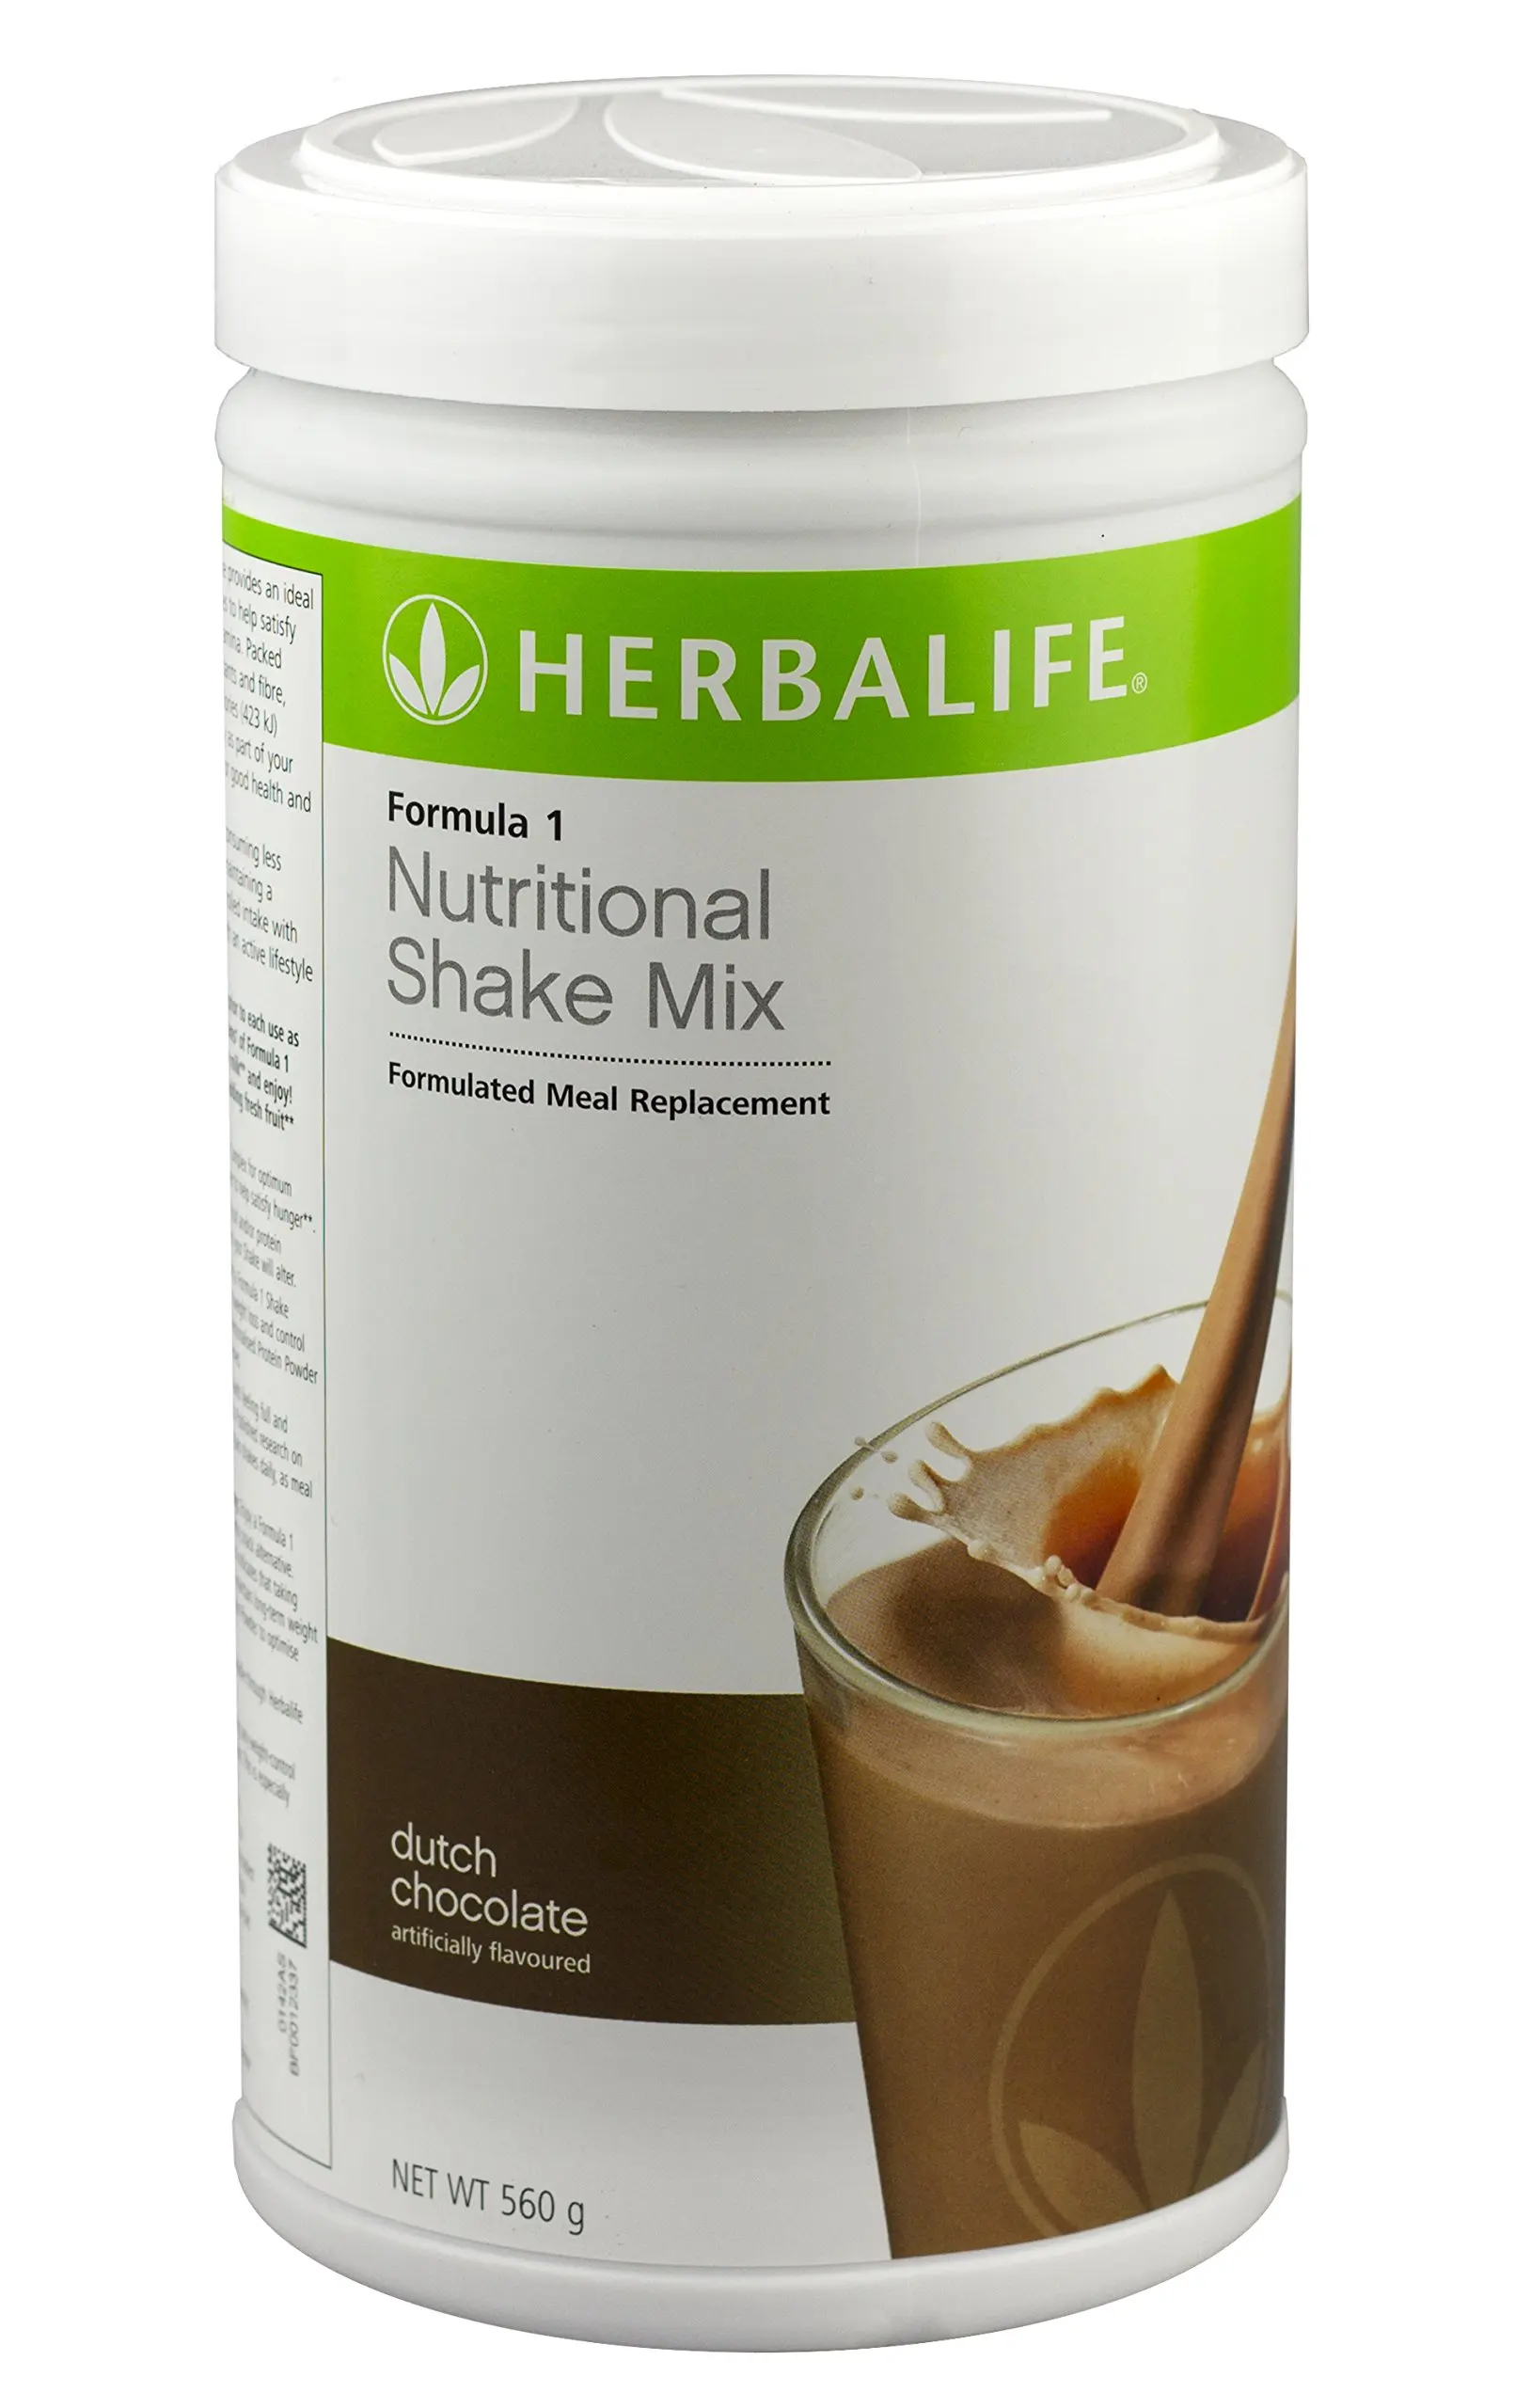 Buy Herbalife Formula 1 Nutritional Shake Mix (750g) - Mint Chocolate